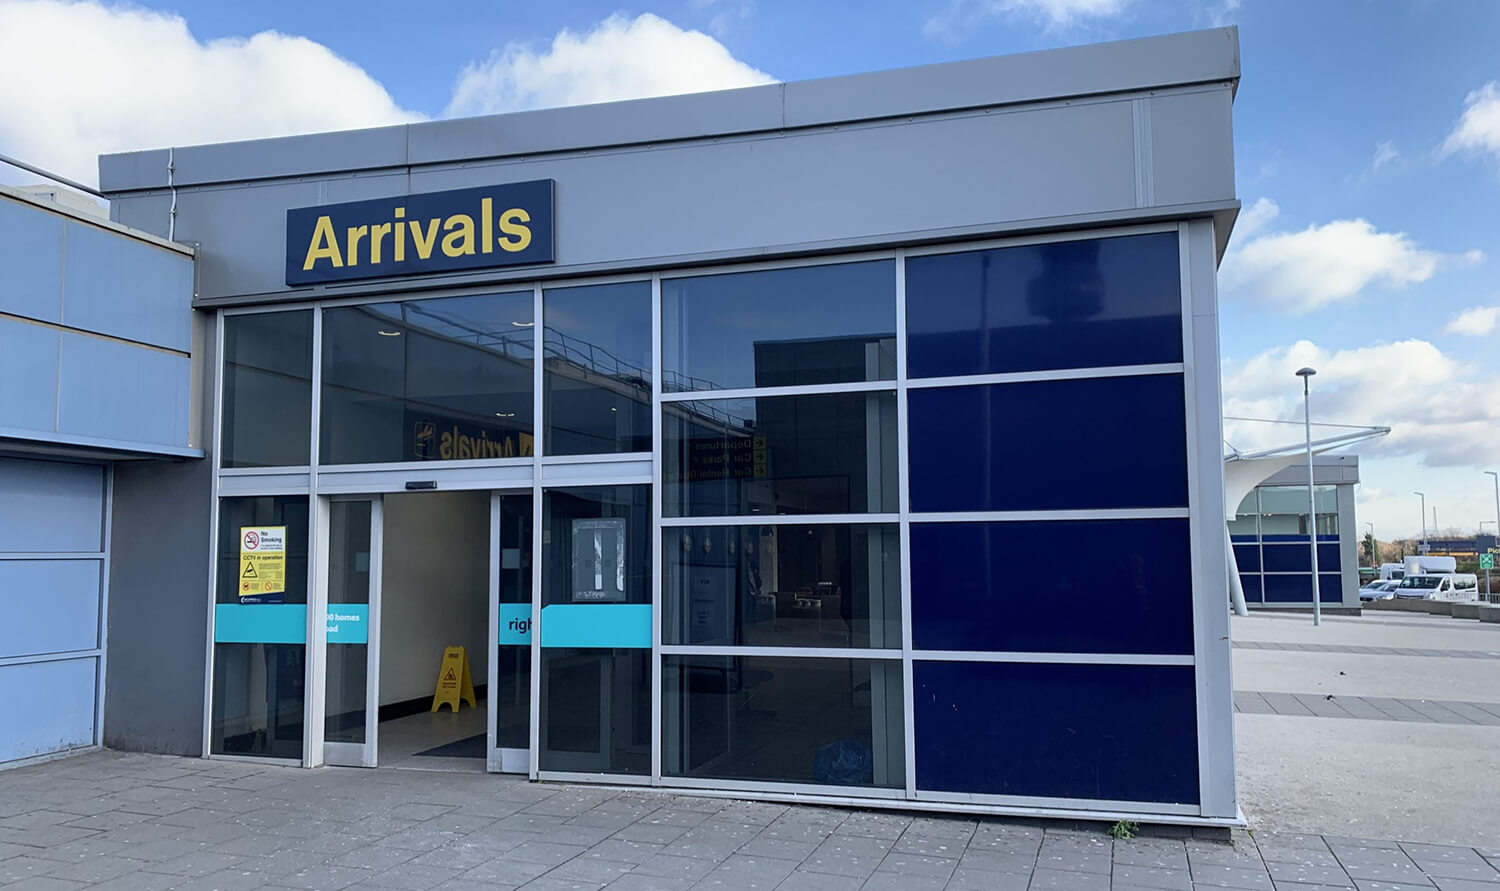 East Midlands airport live arrivals